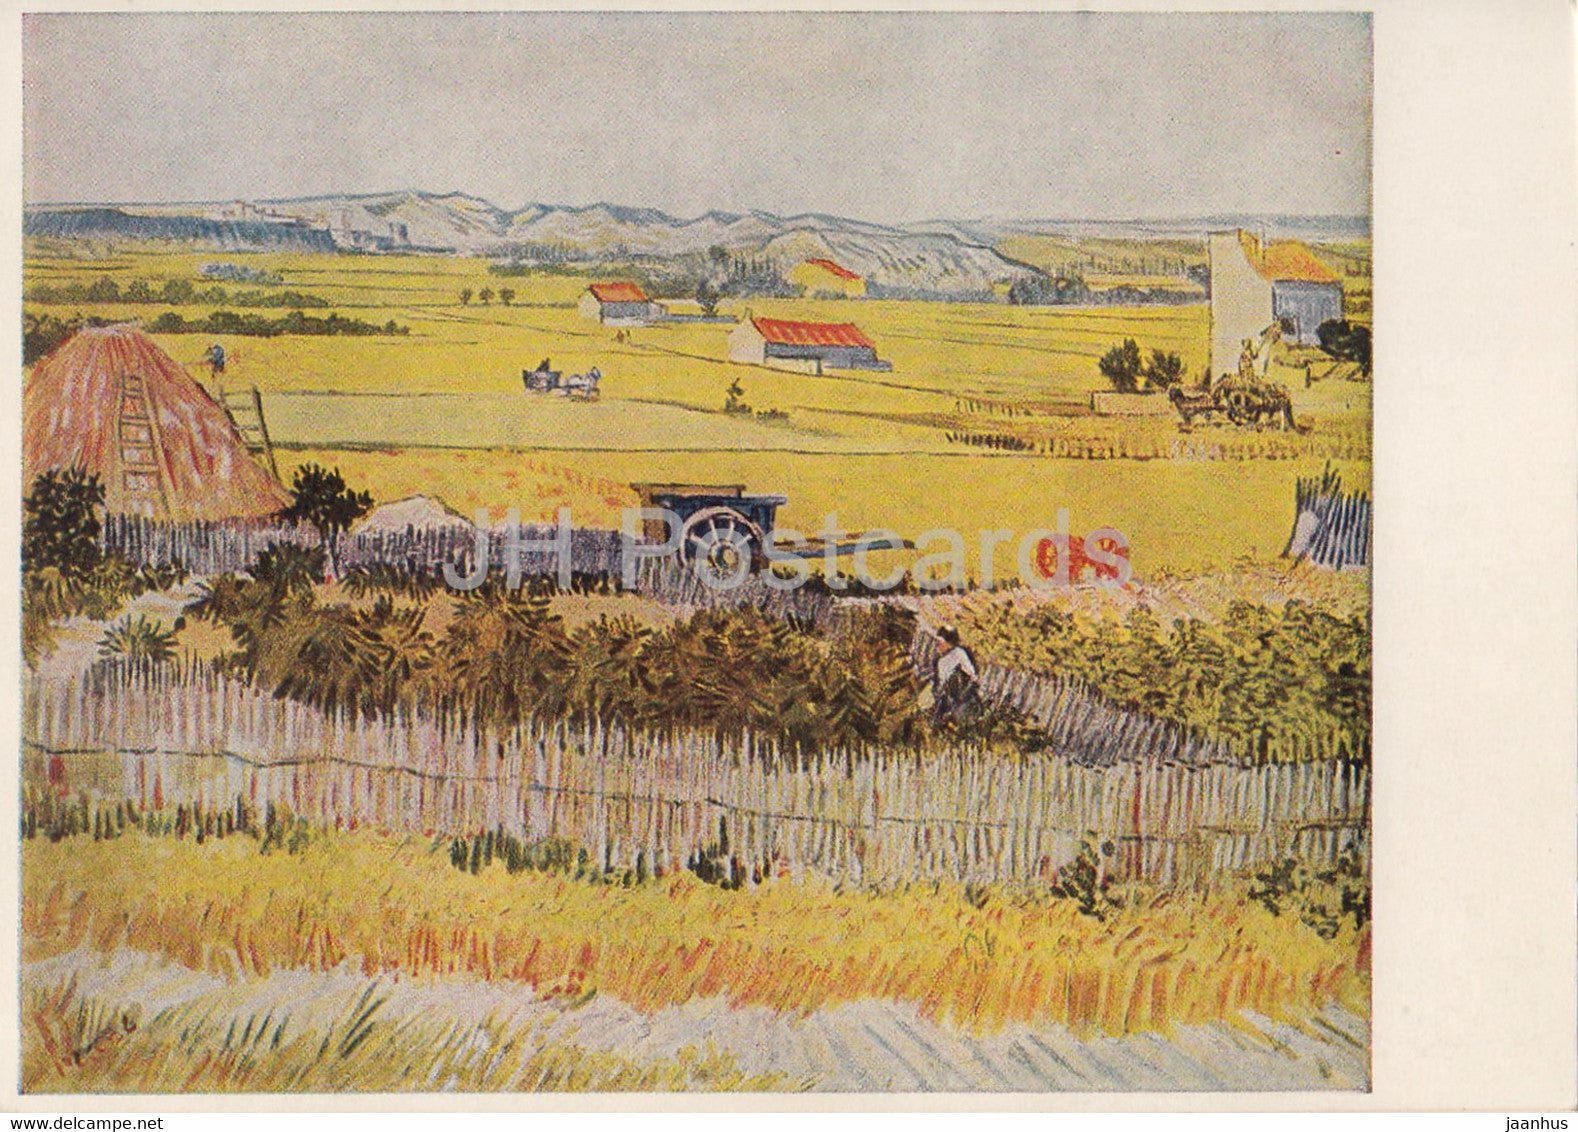 painting by Vincent van Gogh - Landschaft mit Gemusegarten - Dutch art - Germany - unused - JH Postcards